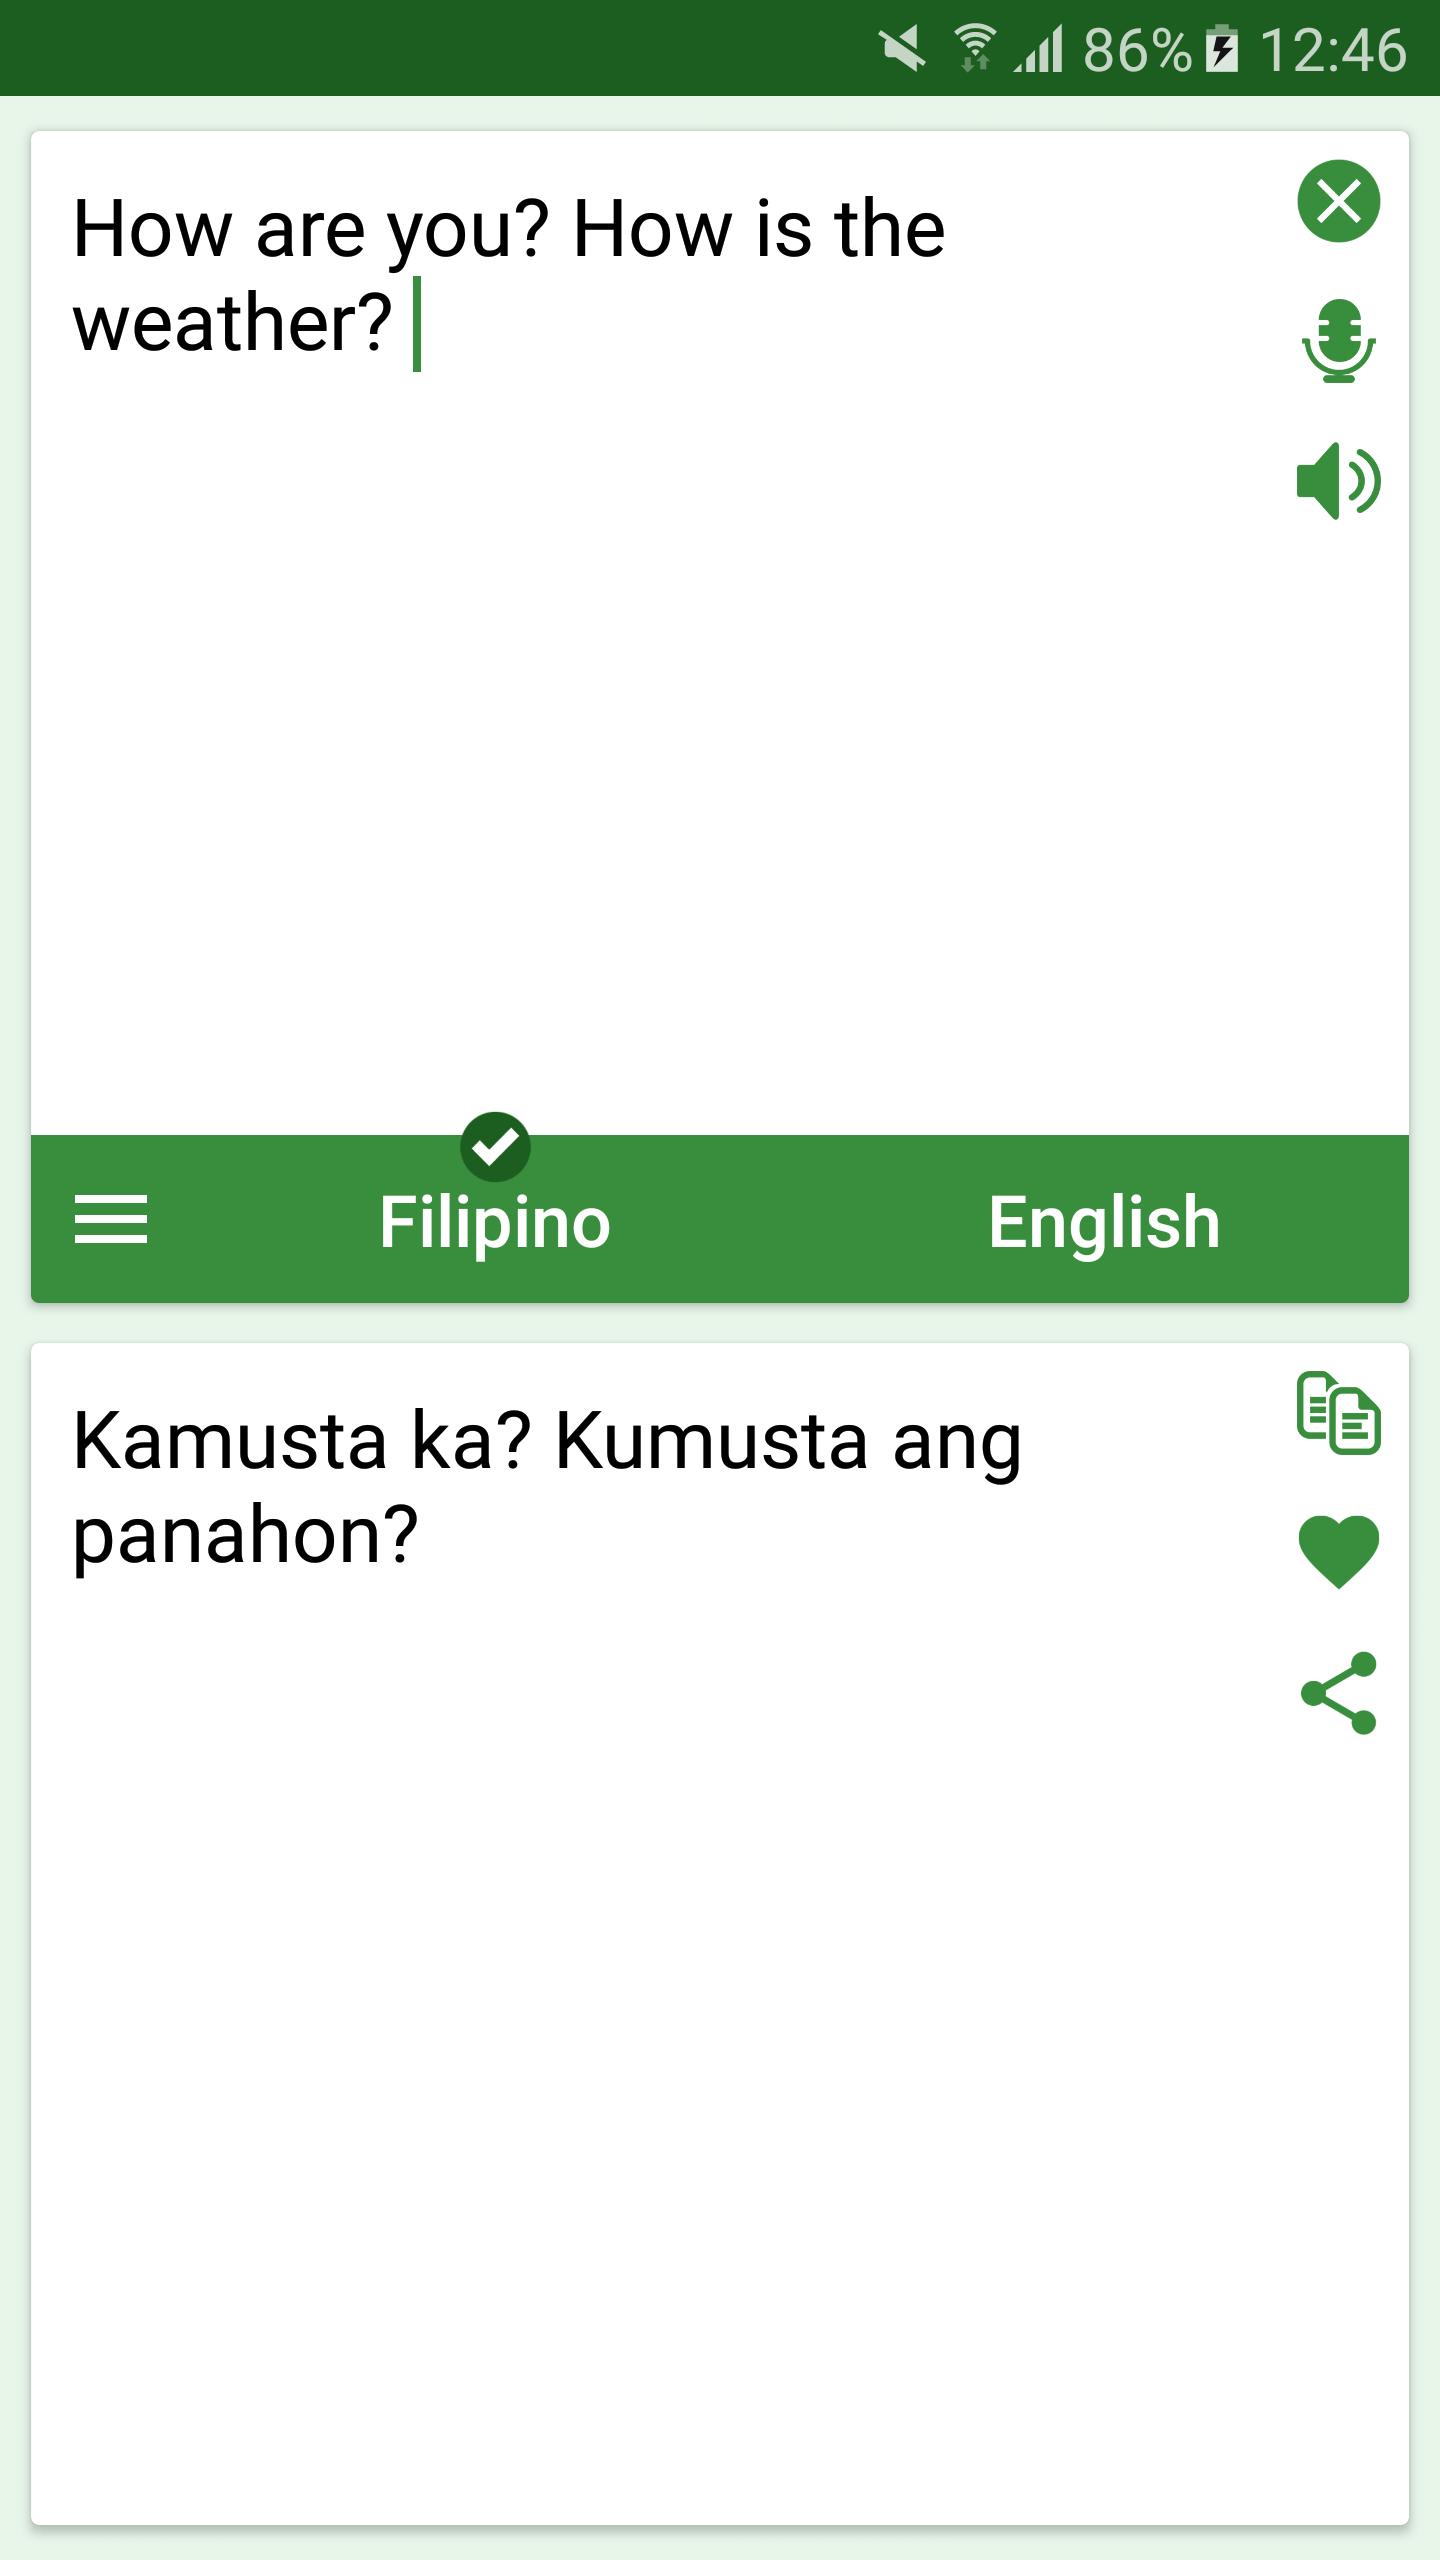 English tagalog to Question! Tagalog